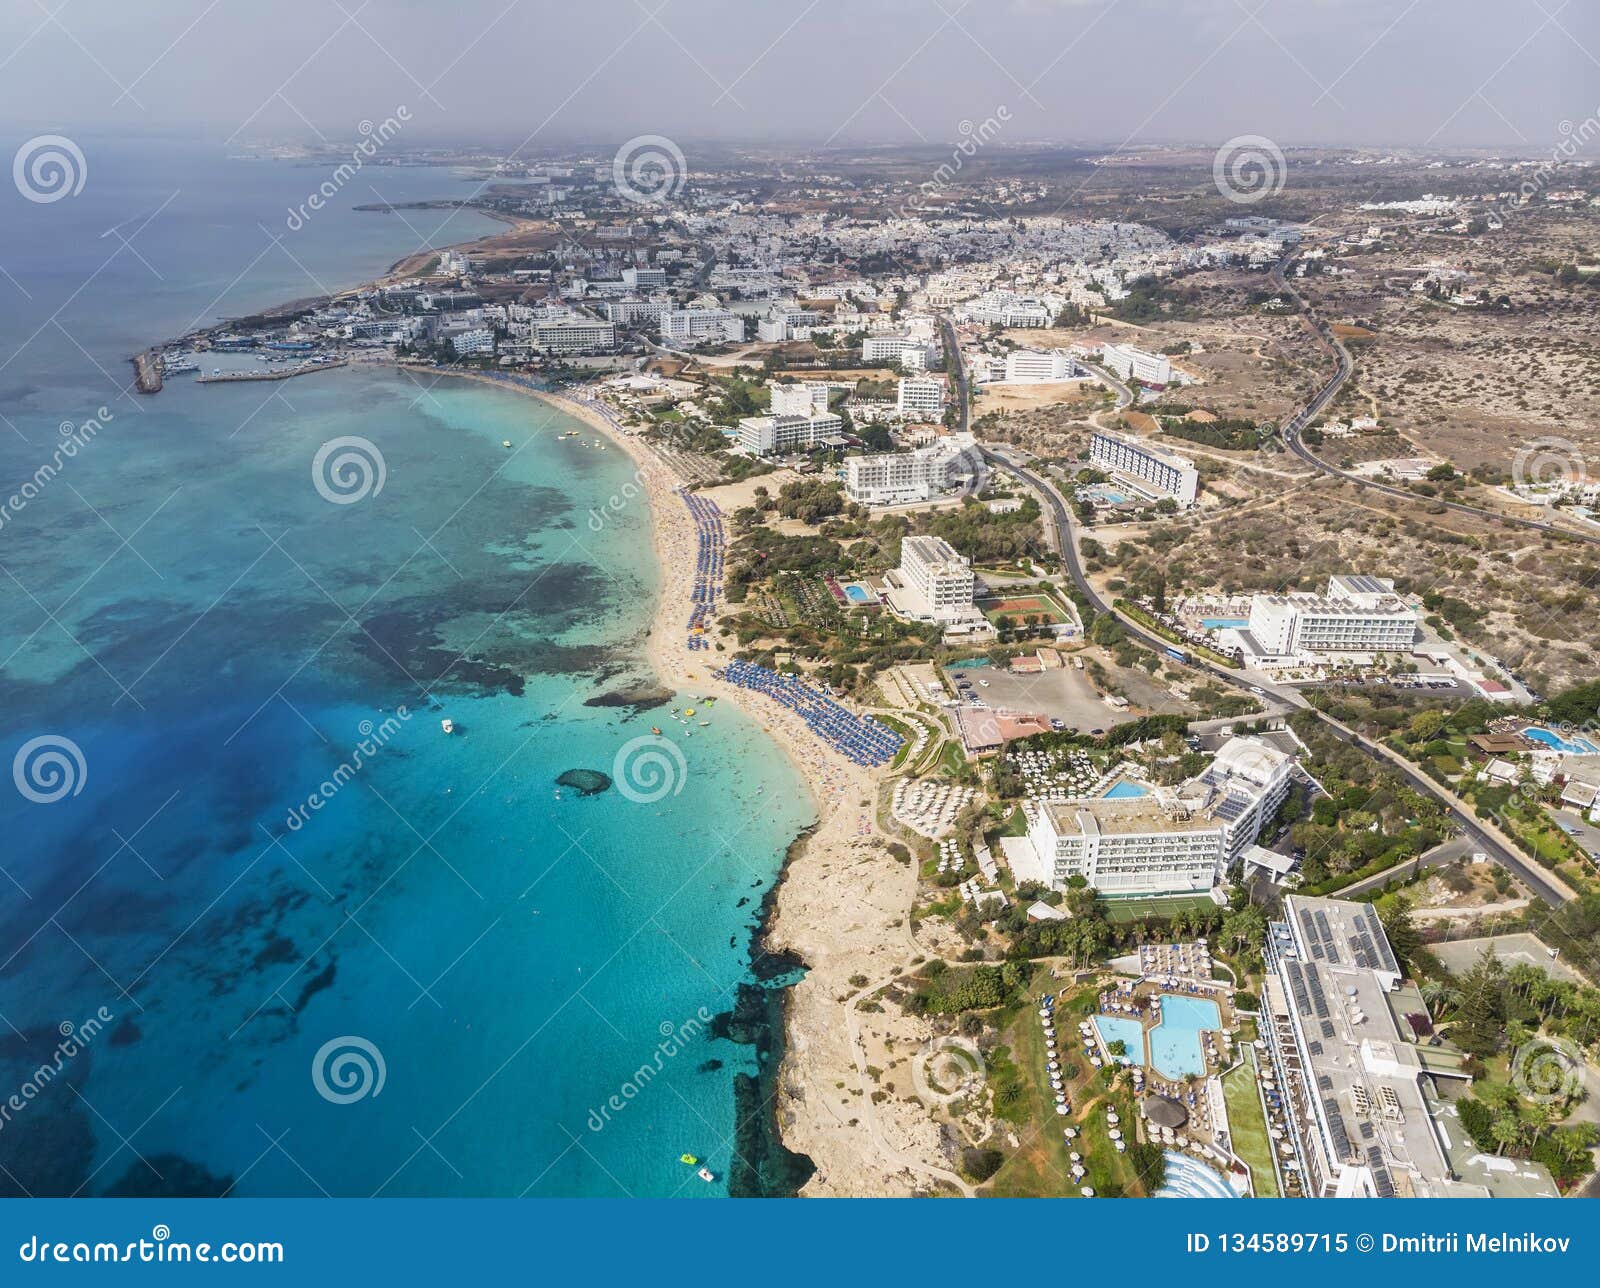 Cyprus Beautiful Coastline, Mediterranean Sea of Turquoise Color ...